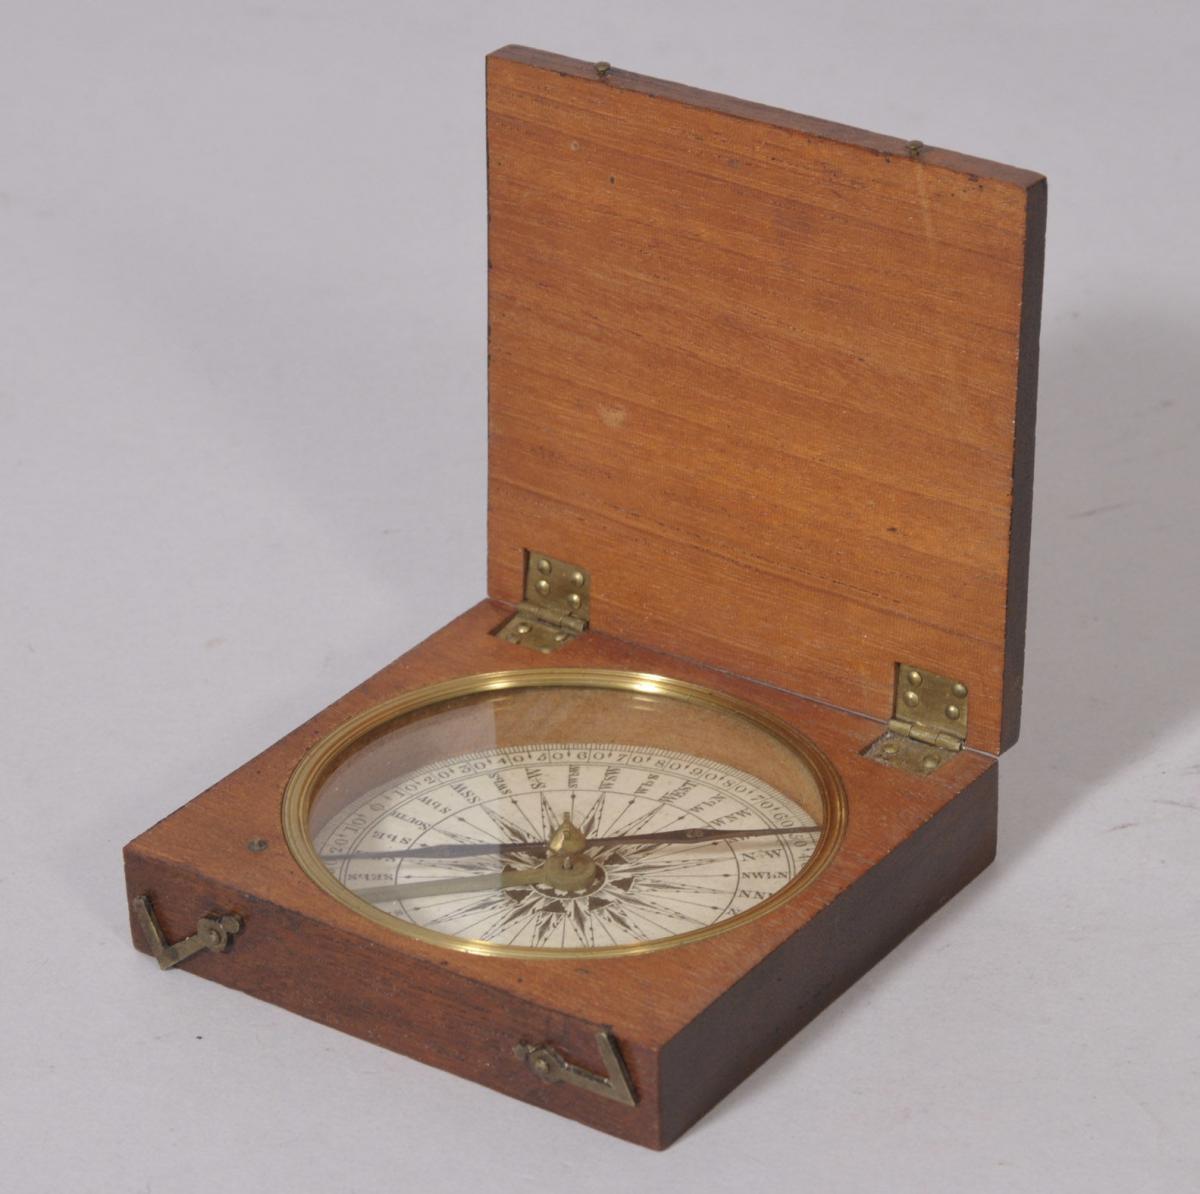 S/2560 Antique Treen 18th Century Mahogany Cased Explorer's Pocket Compass